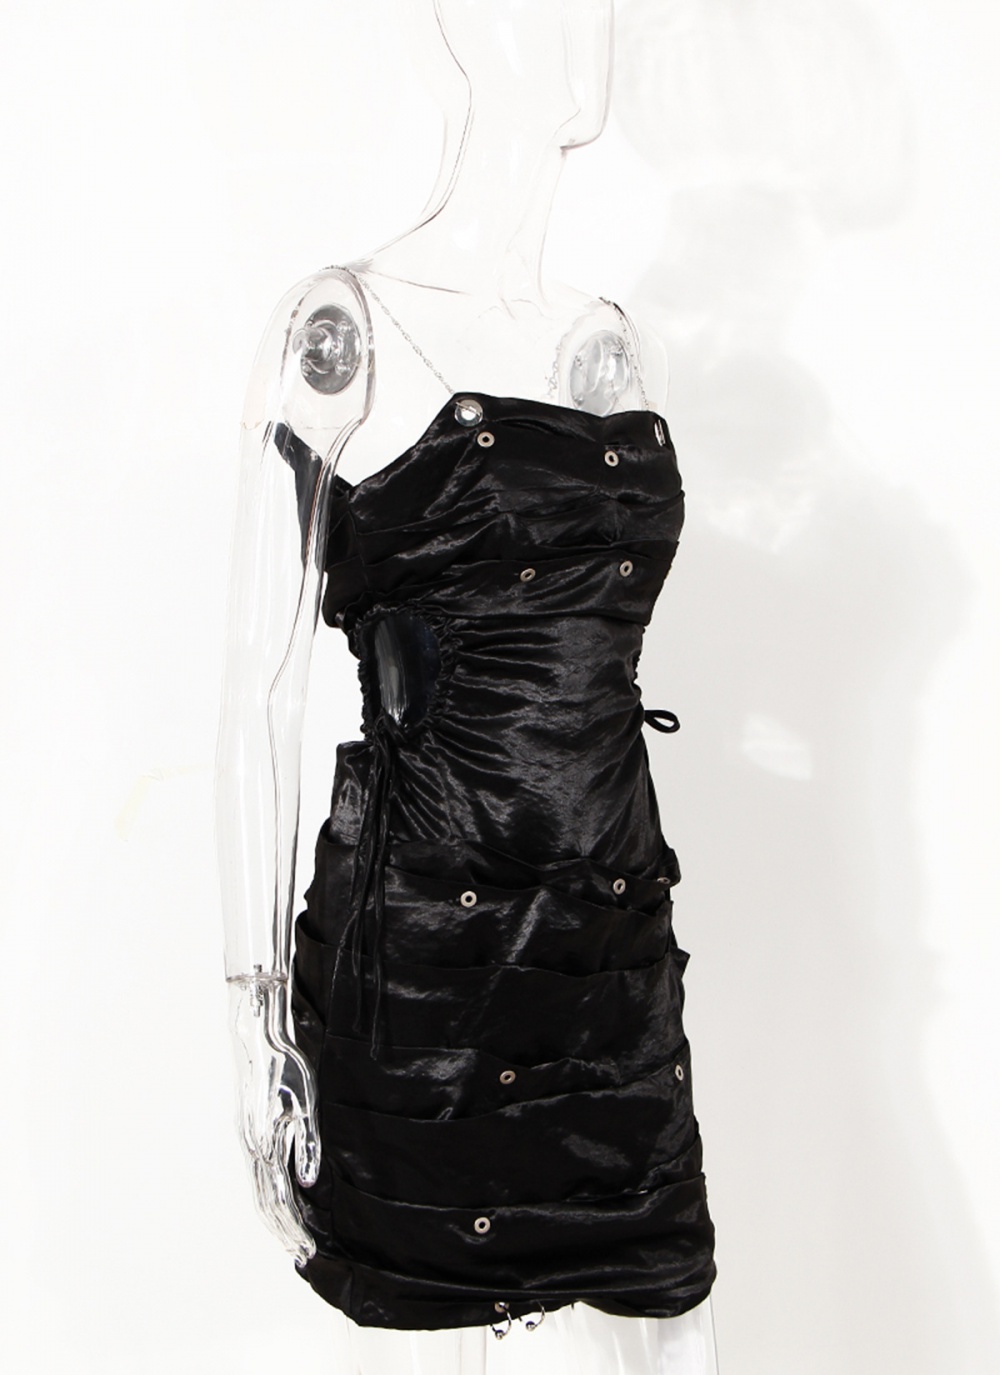 Satin black chain metal strap dress slim rivet summer dress